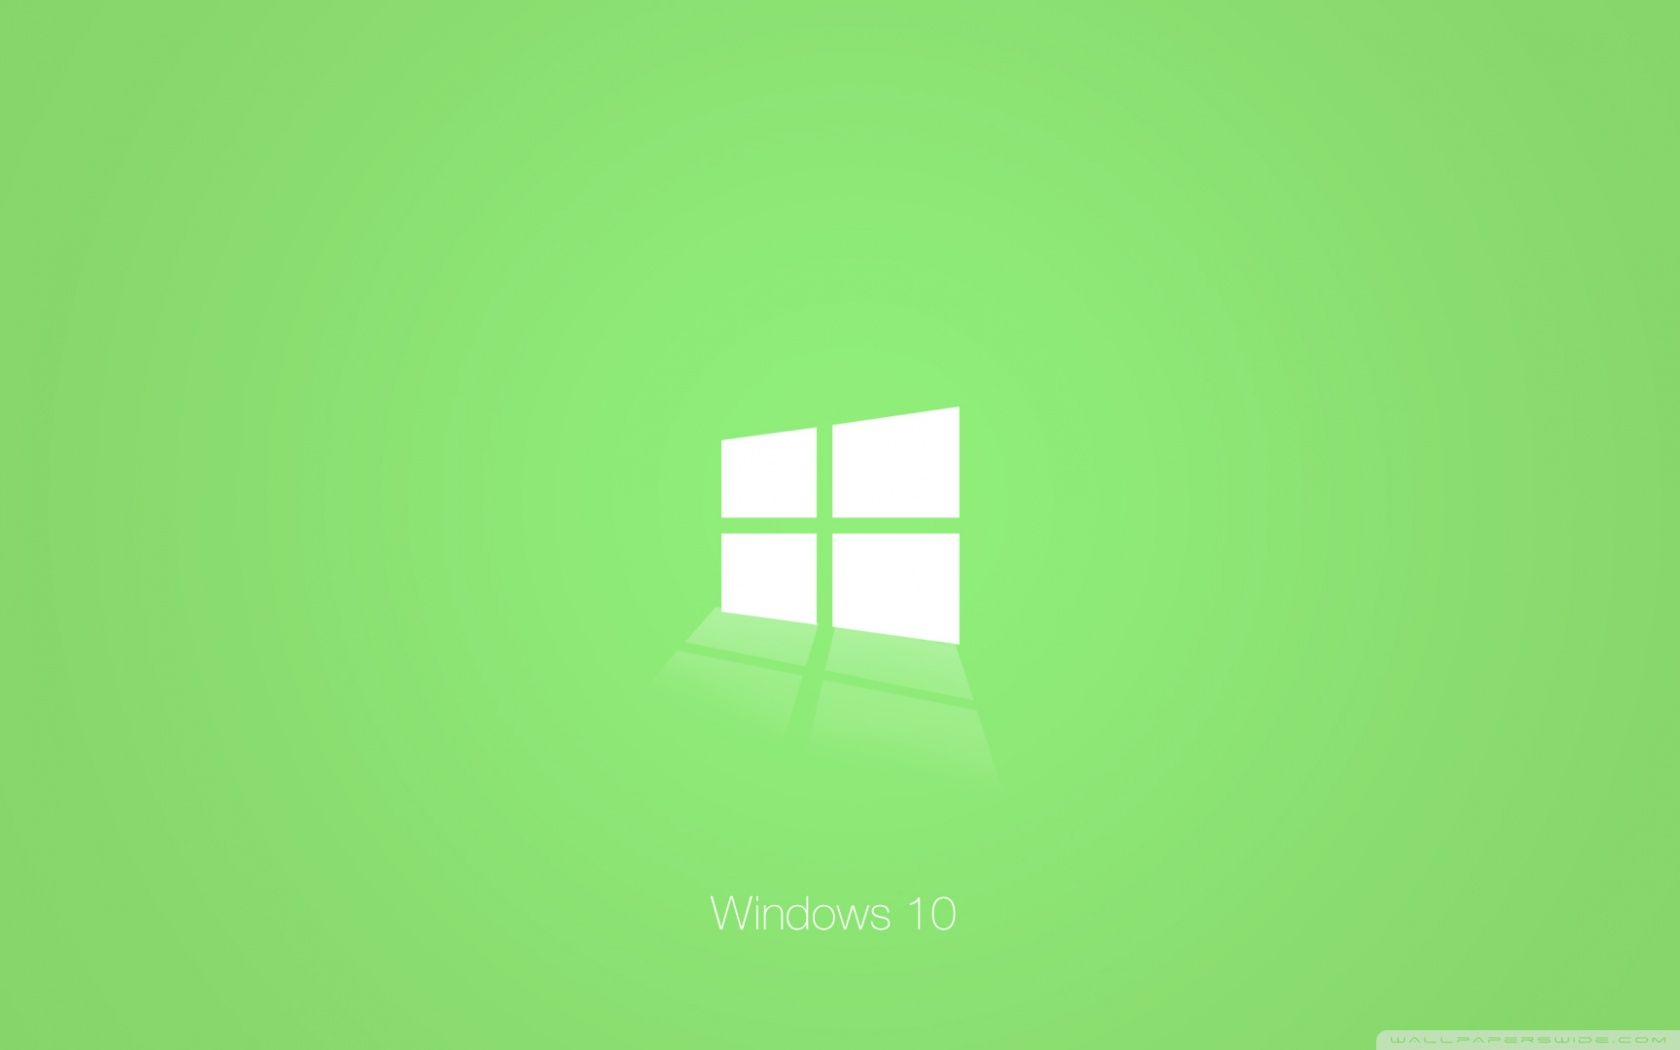 Windows 10 Green Ultra HD Desktop Background Wallpaper for 4K UHD TV, Widescreen & UltraWide Desktop & Laptop, Tablet